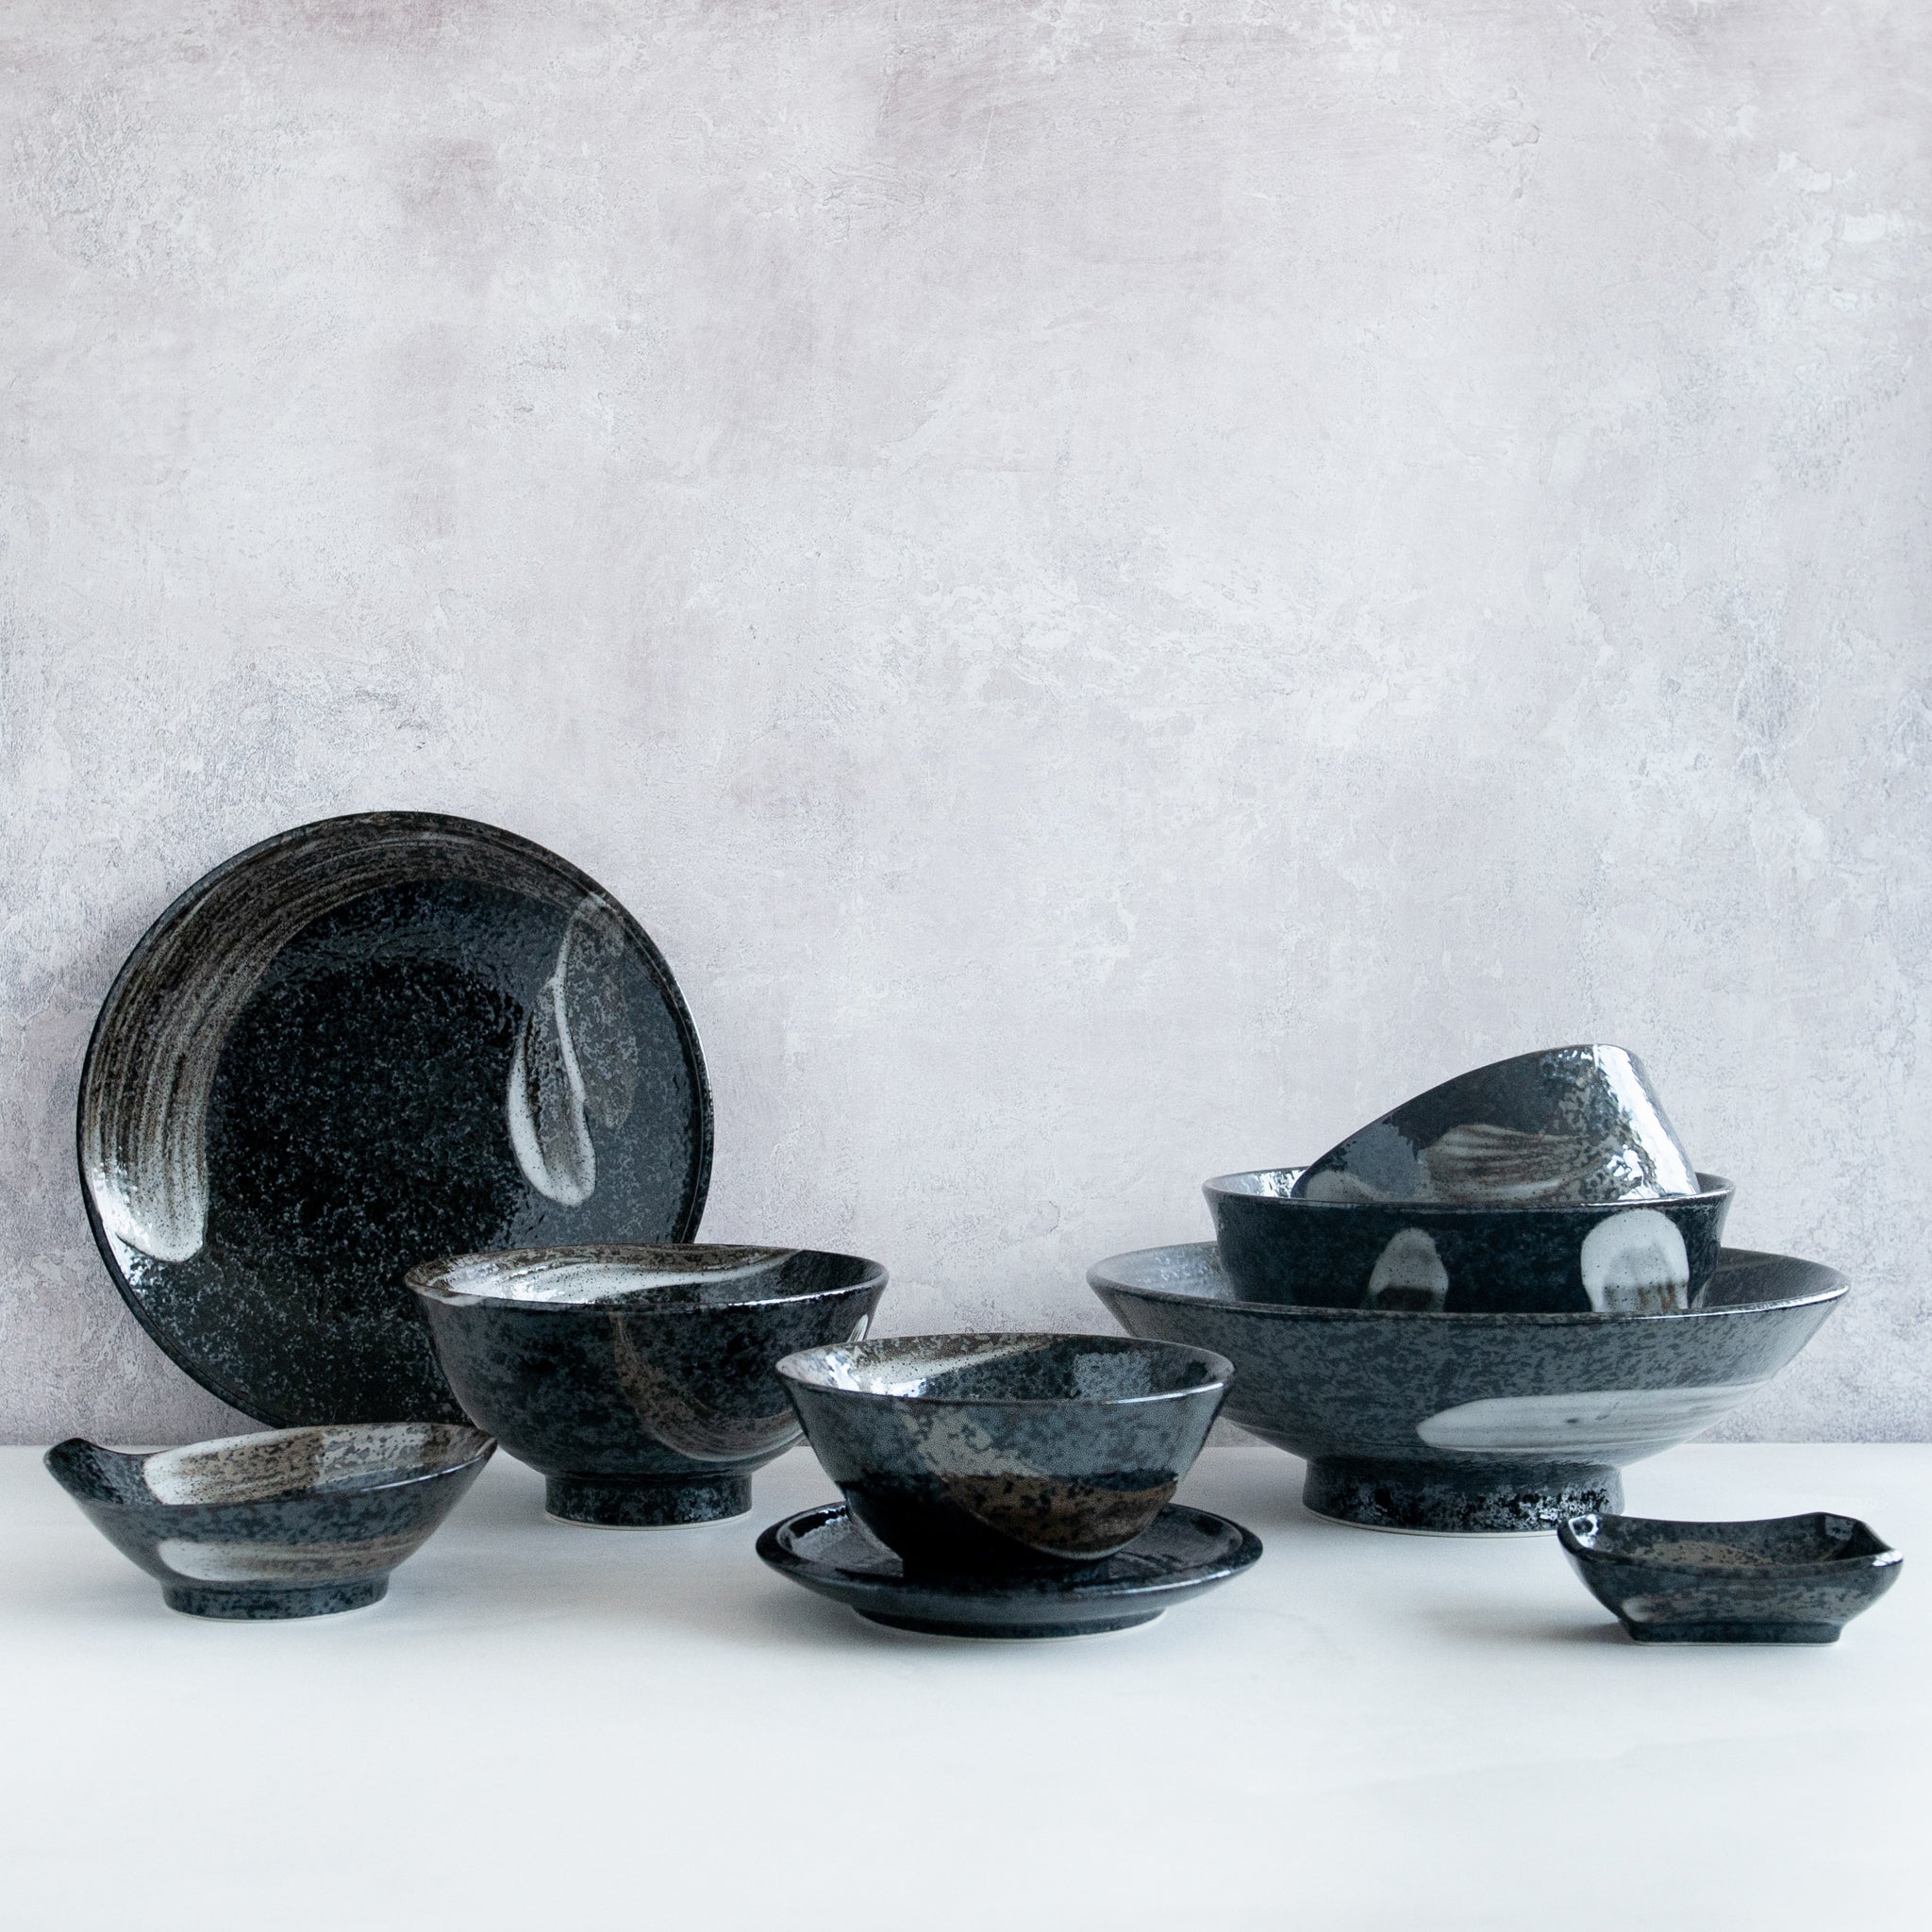 Kiji Stoneware & Ceramics Karasuba-Iro Ramen Bowl Tableware Ramen Bowls Japanese Food